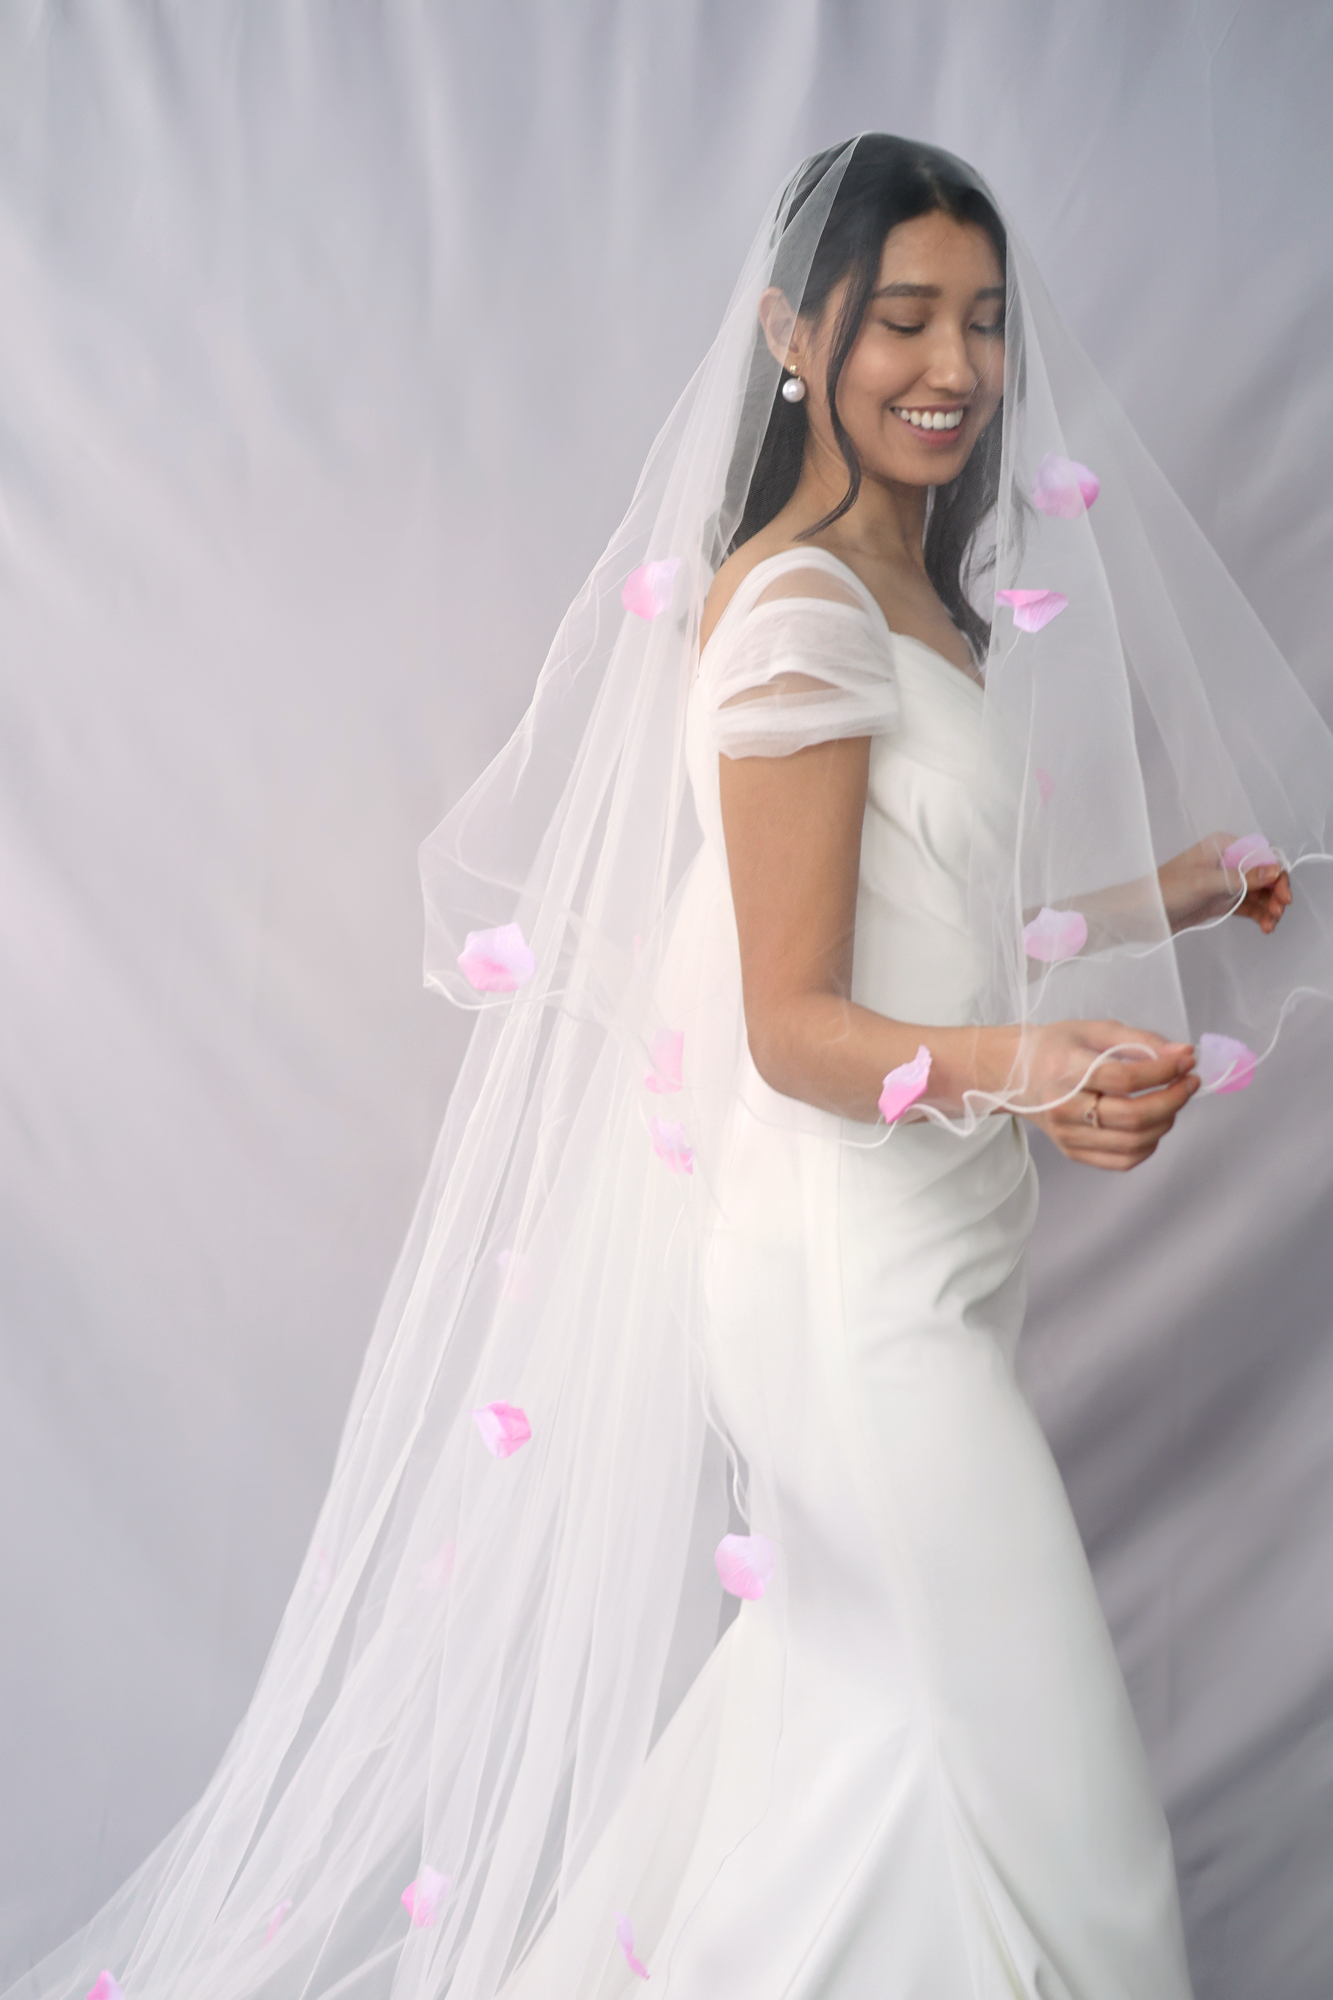 Maeve Floral Veil | Bone & Grey Bridal Accessories